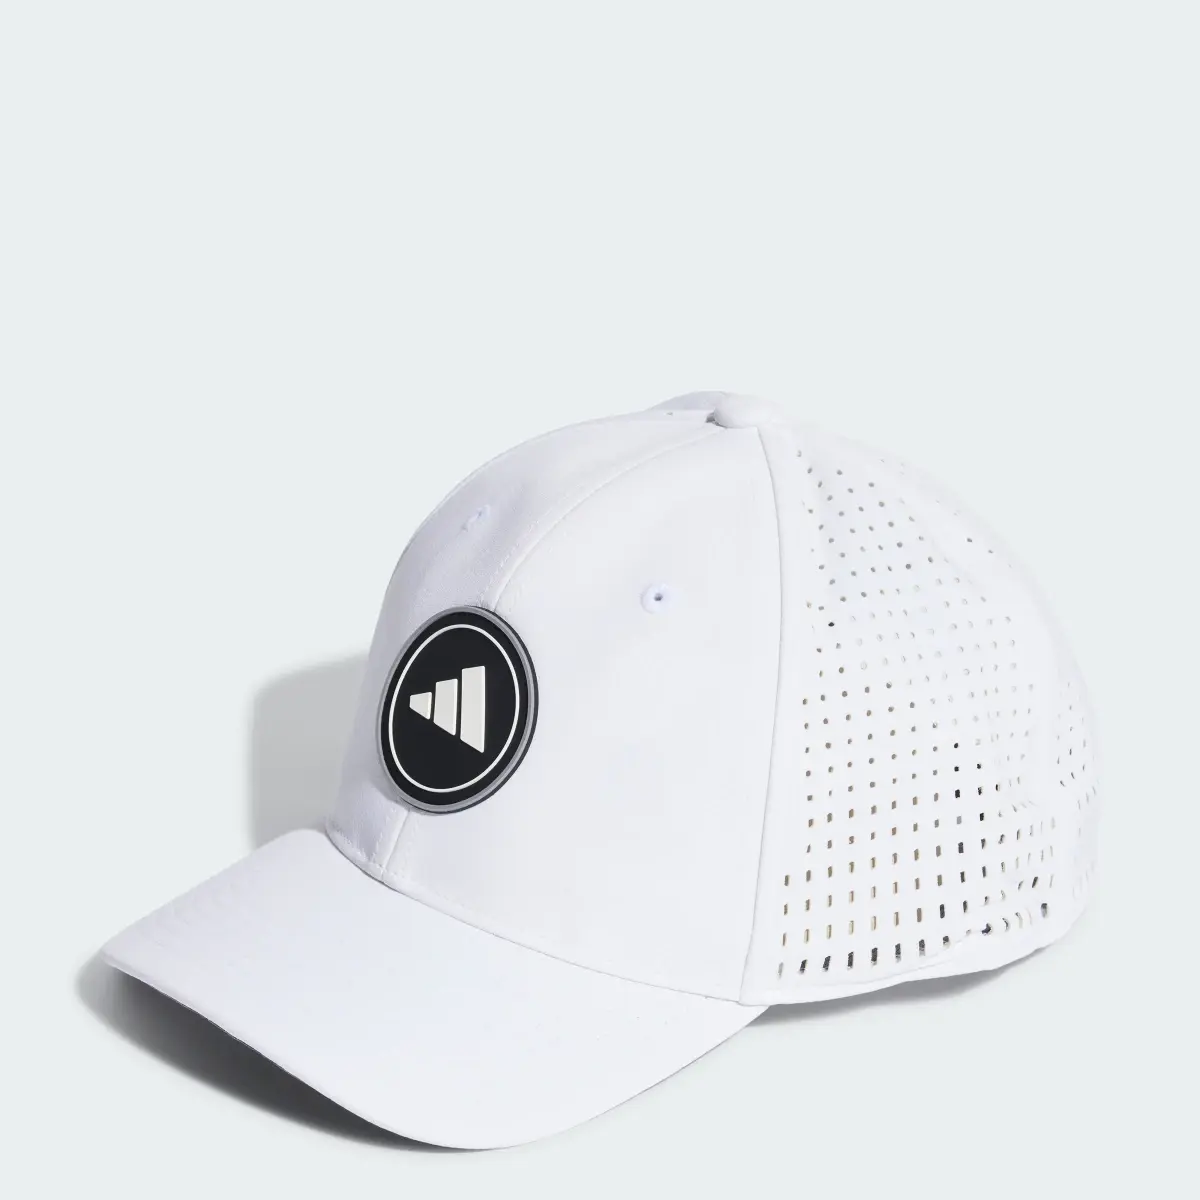 Adidas Hydrophobic Tour Hat. 1